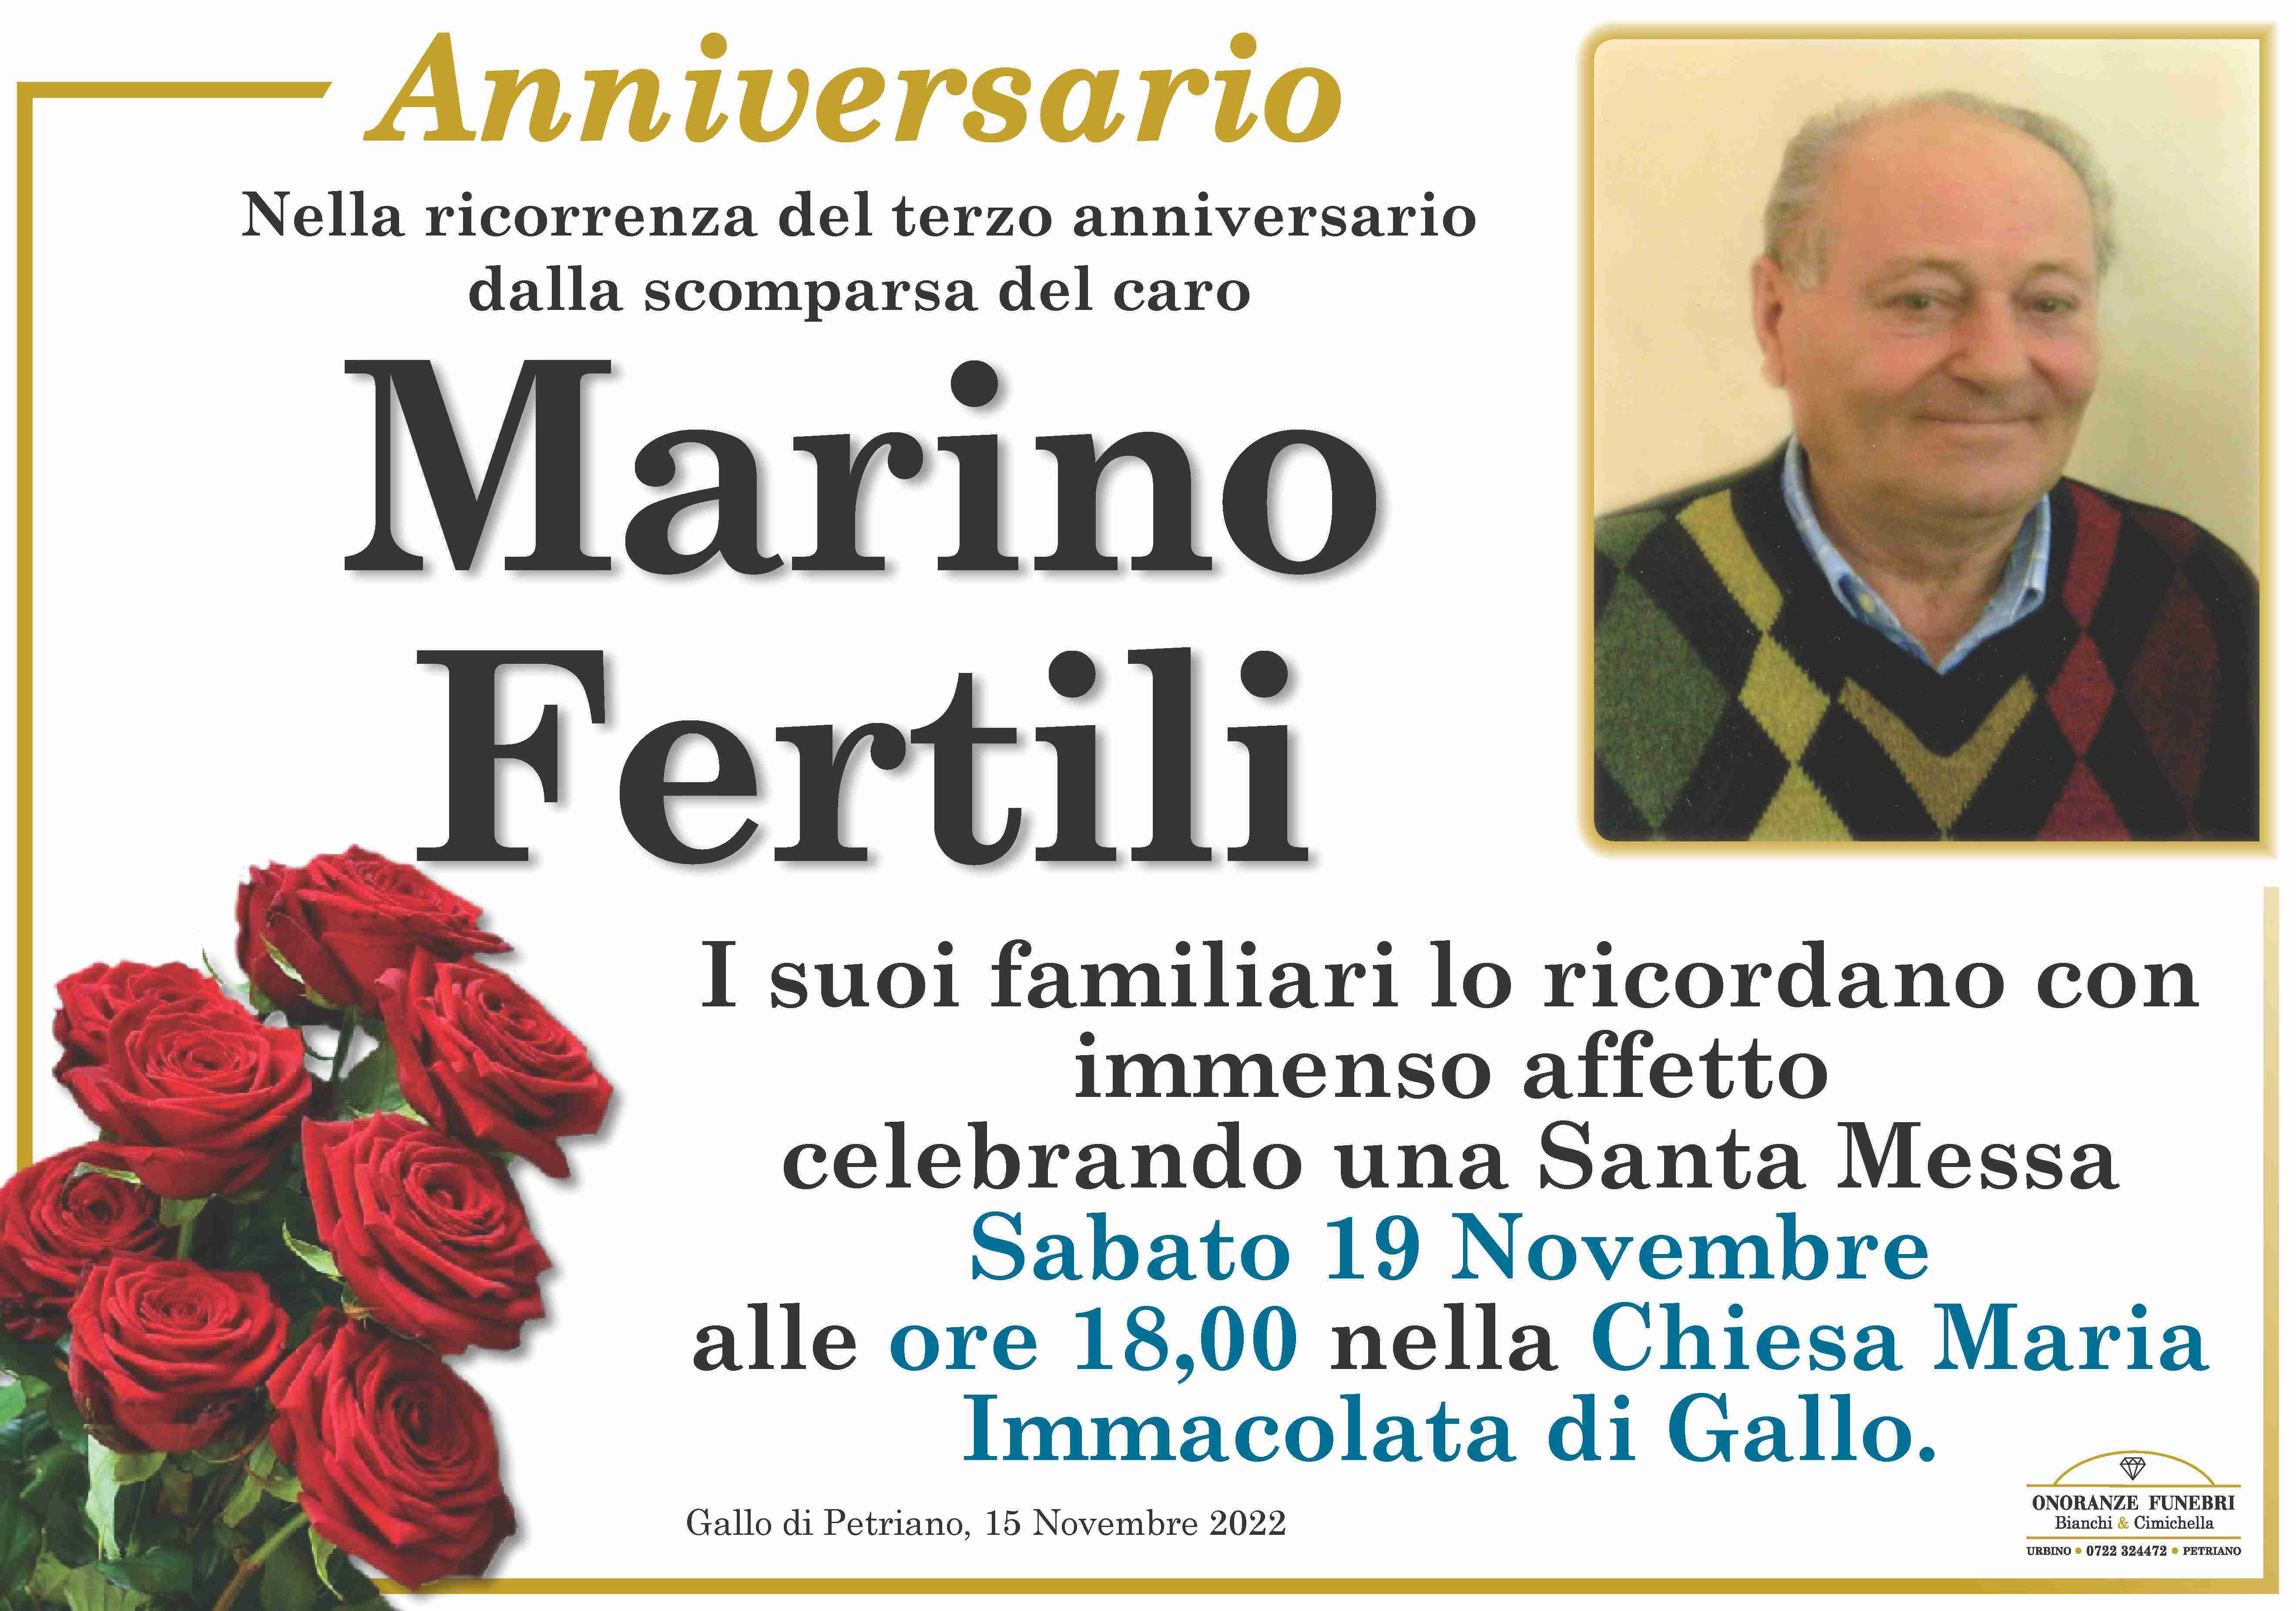 Marino Fertili